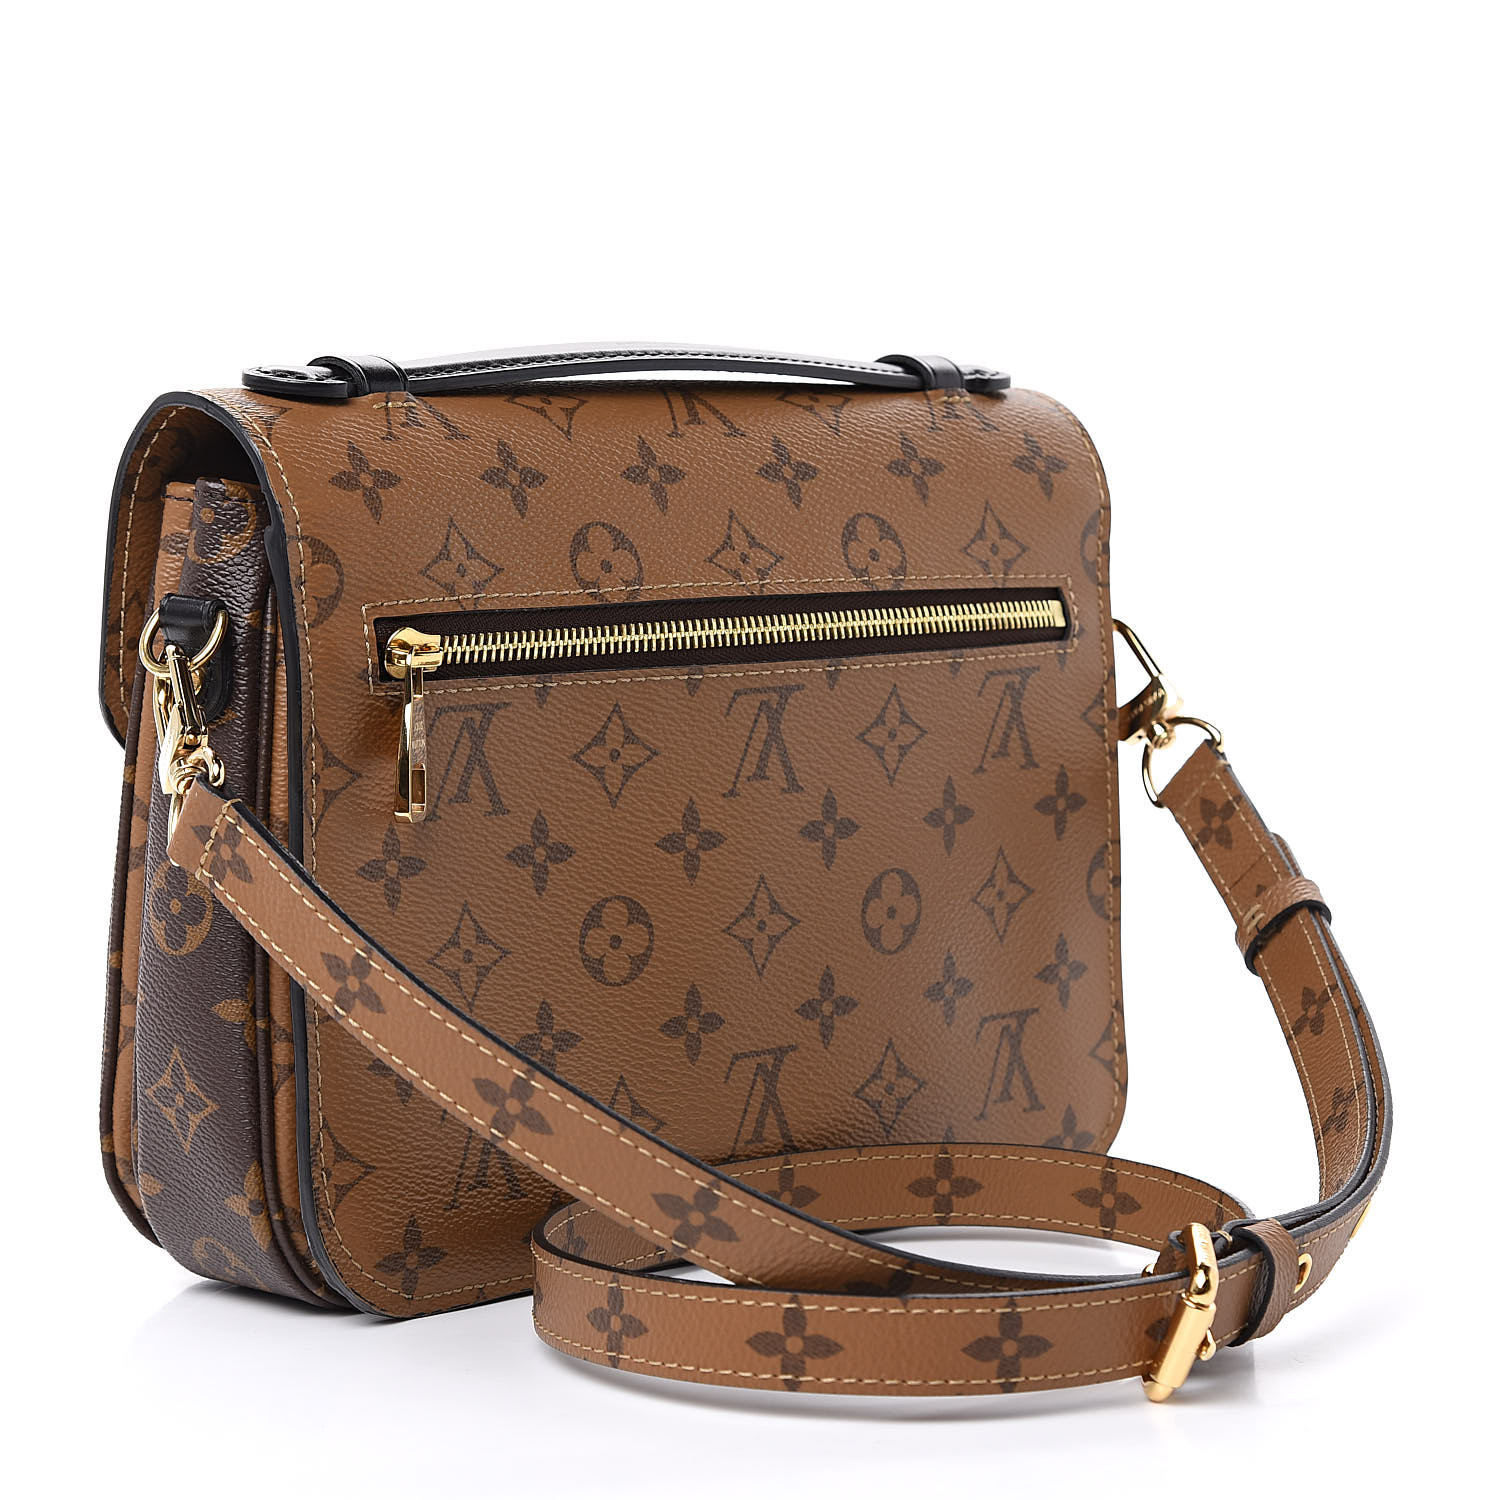 Louis Vuitton graceful pm - clothing & accessories - by owner - apparel  sale - craigslist